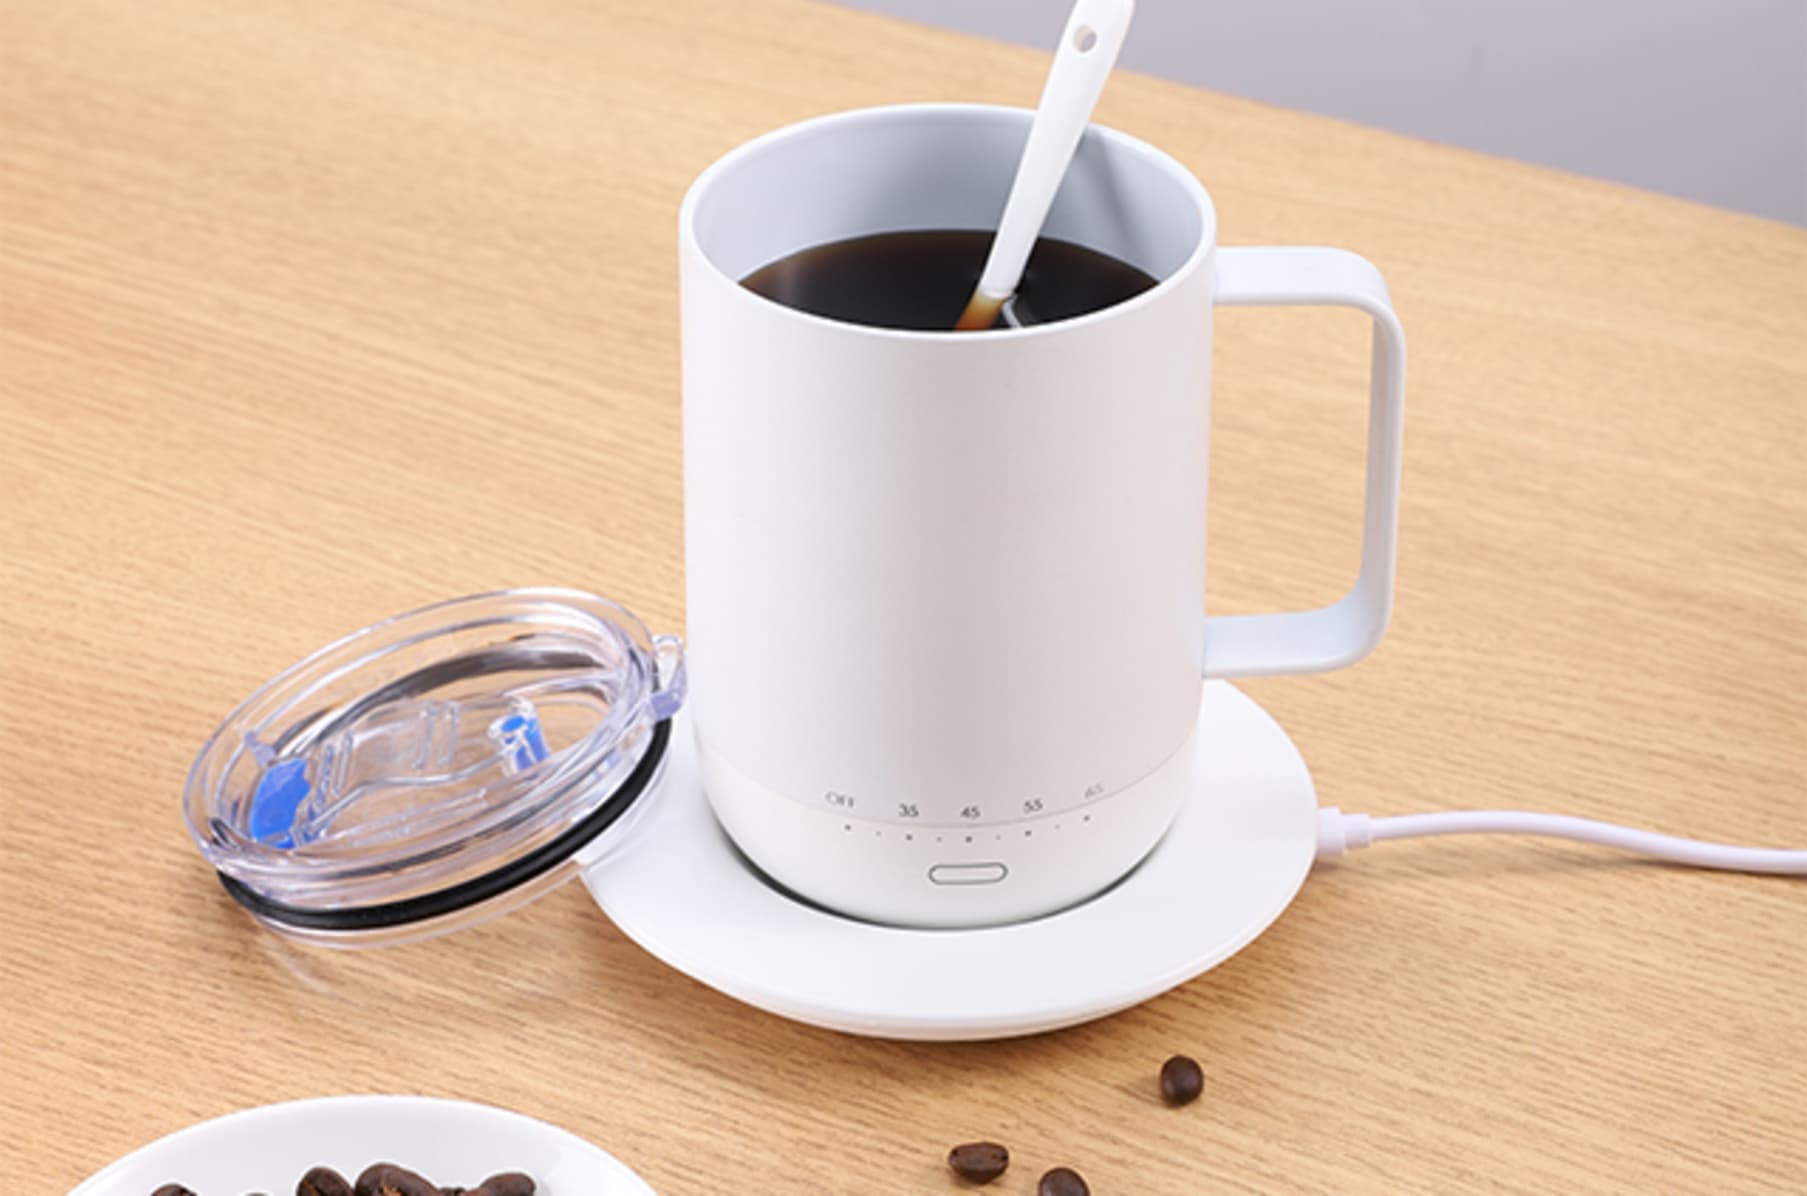 VSITOO-Temperature Control Smart Mug